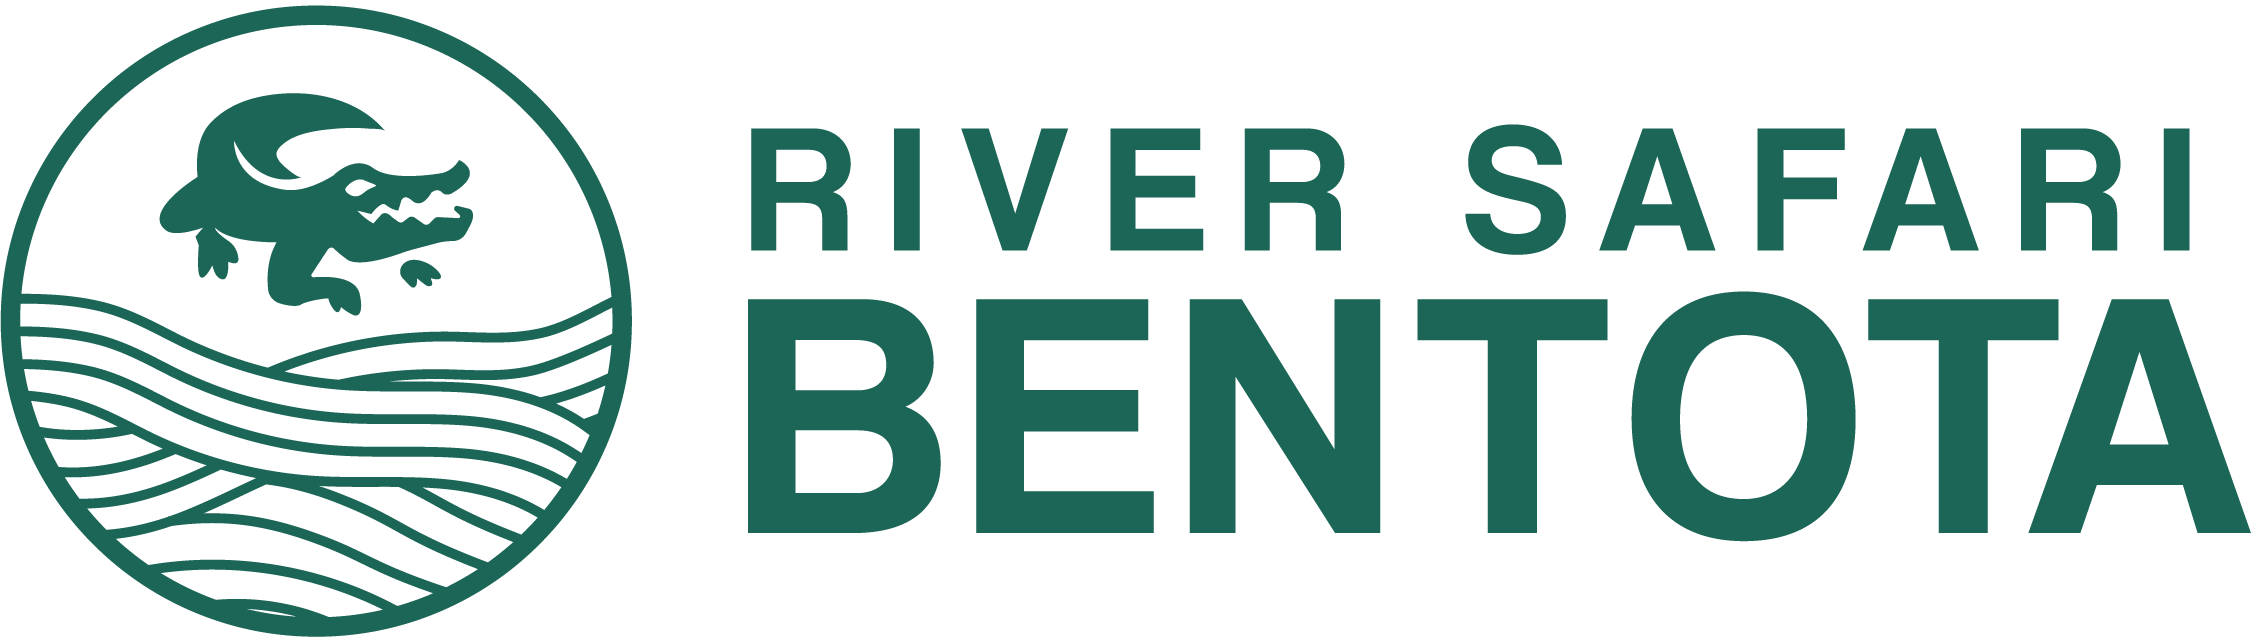 river safari logo